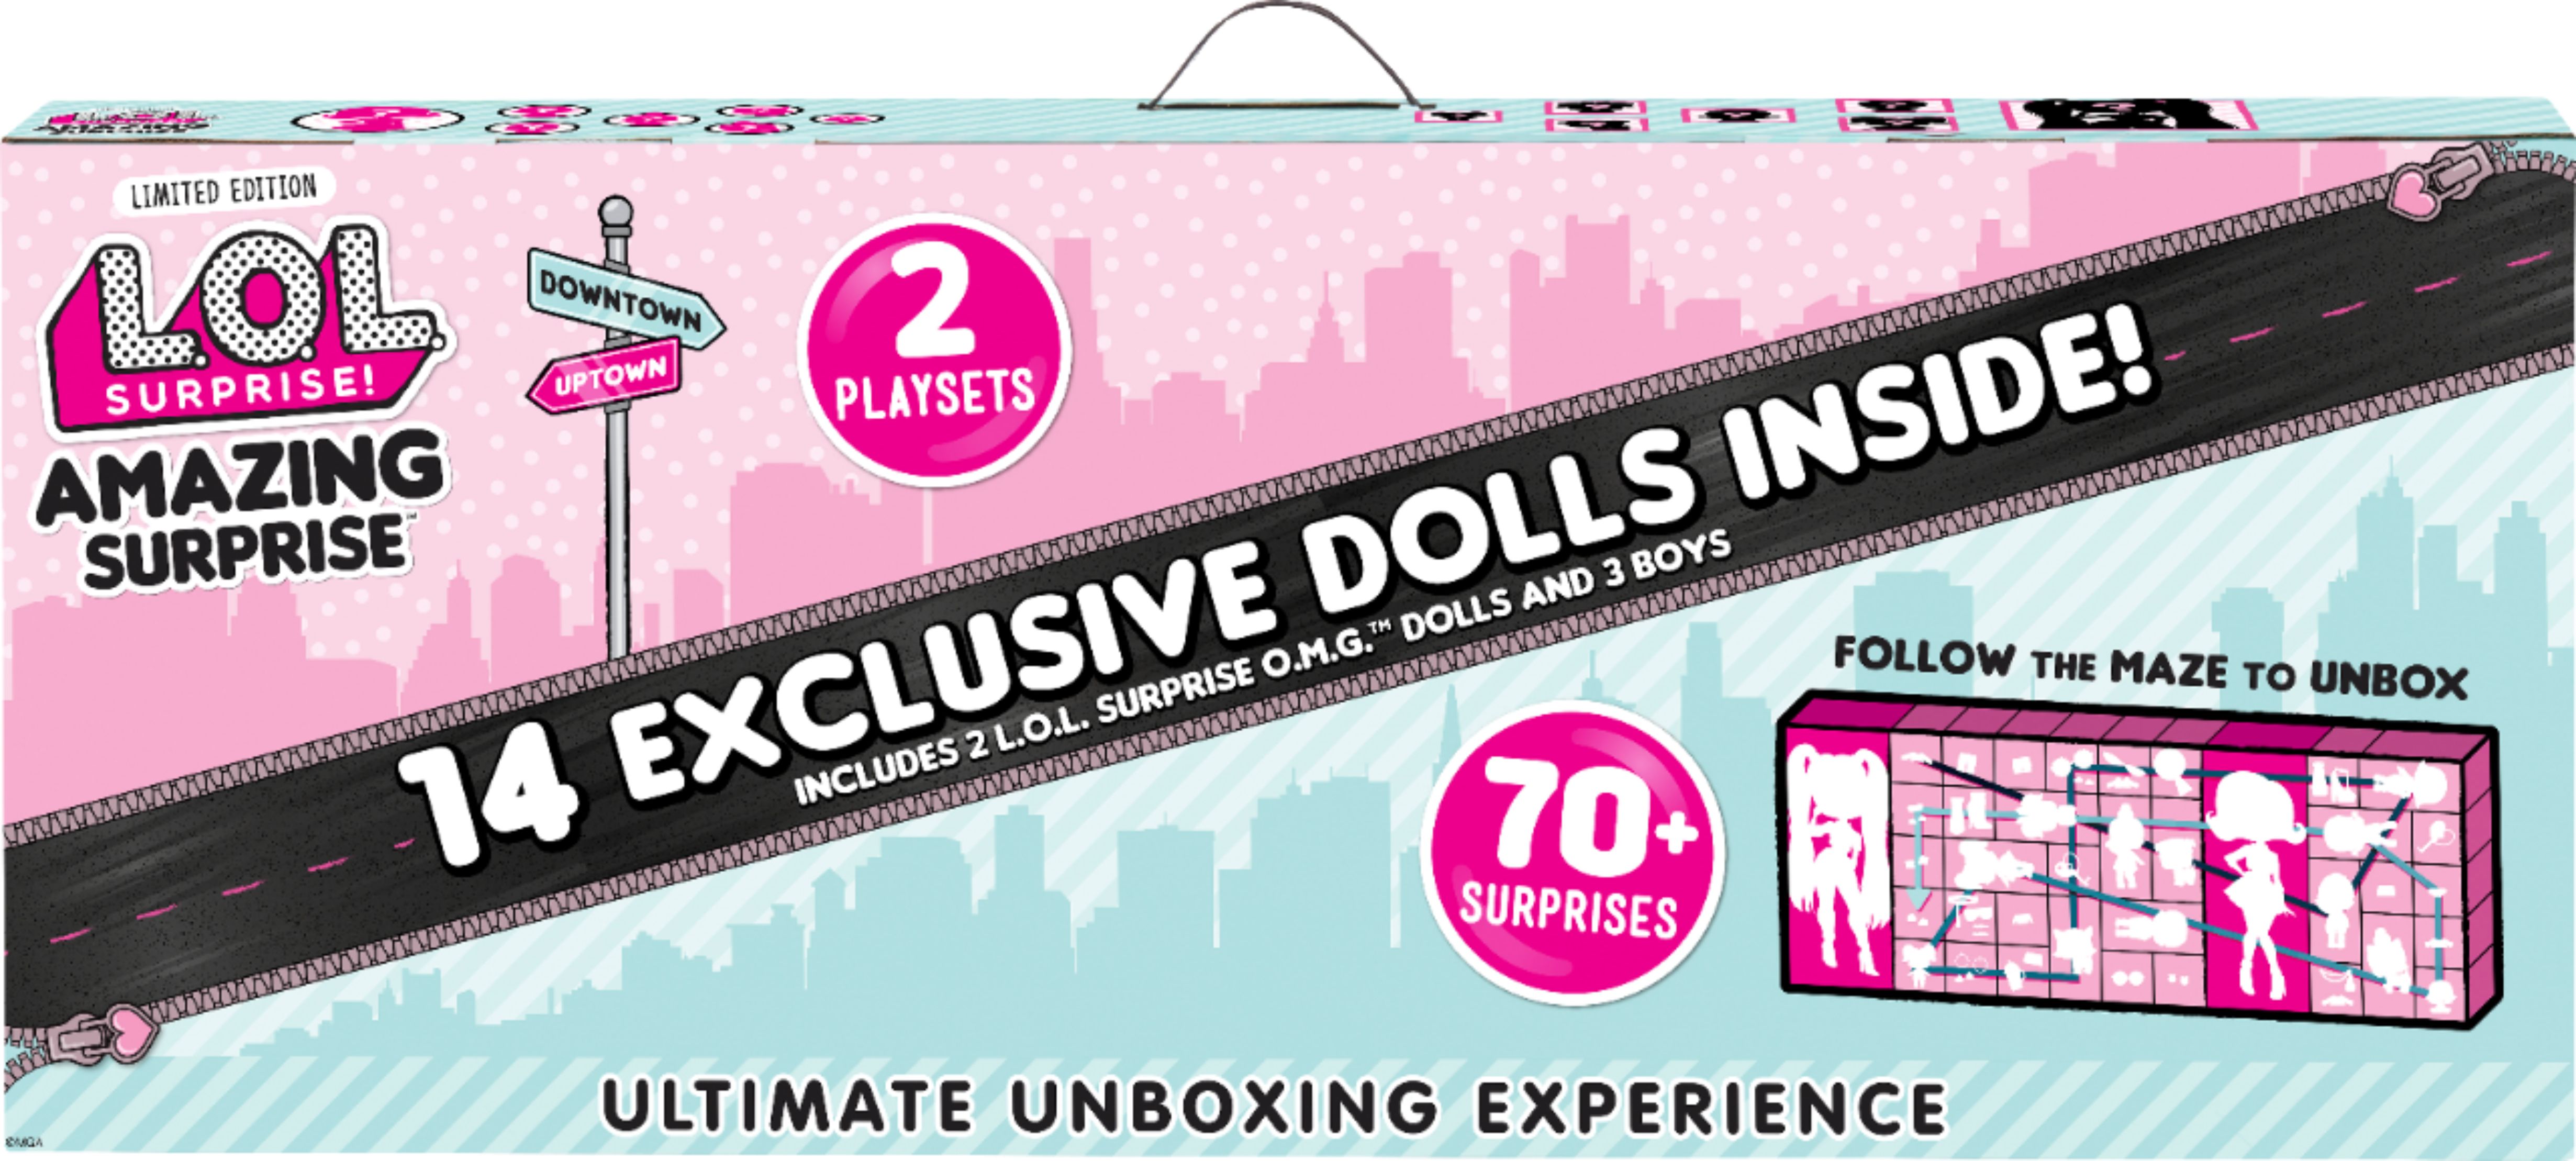 lol surprise dolls cheapest price